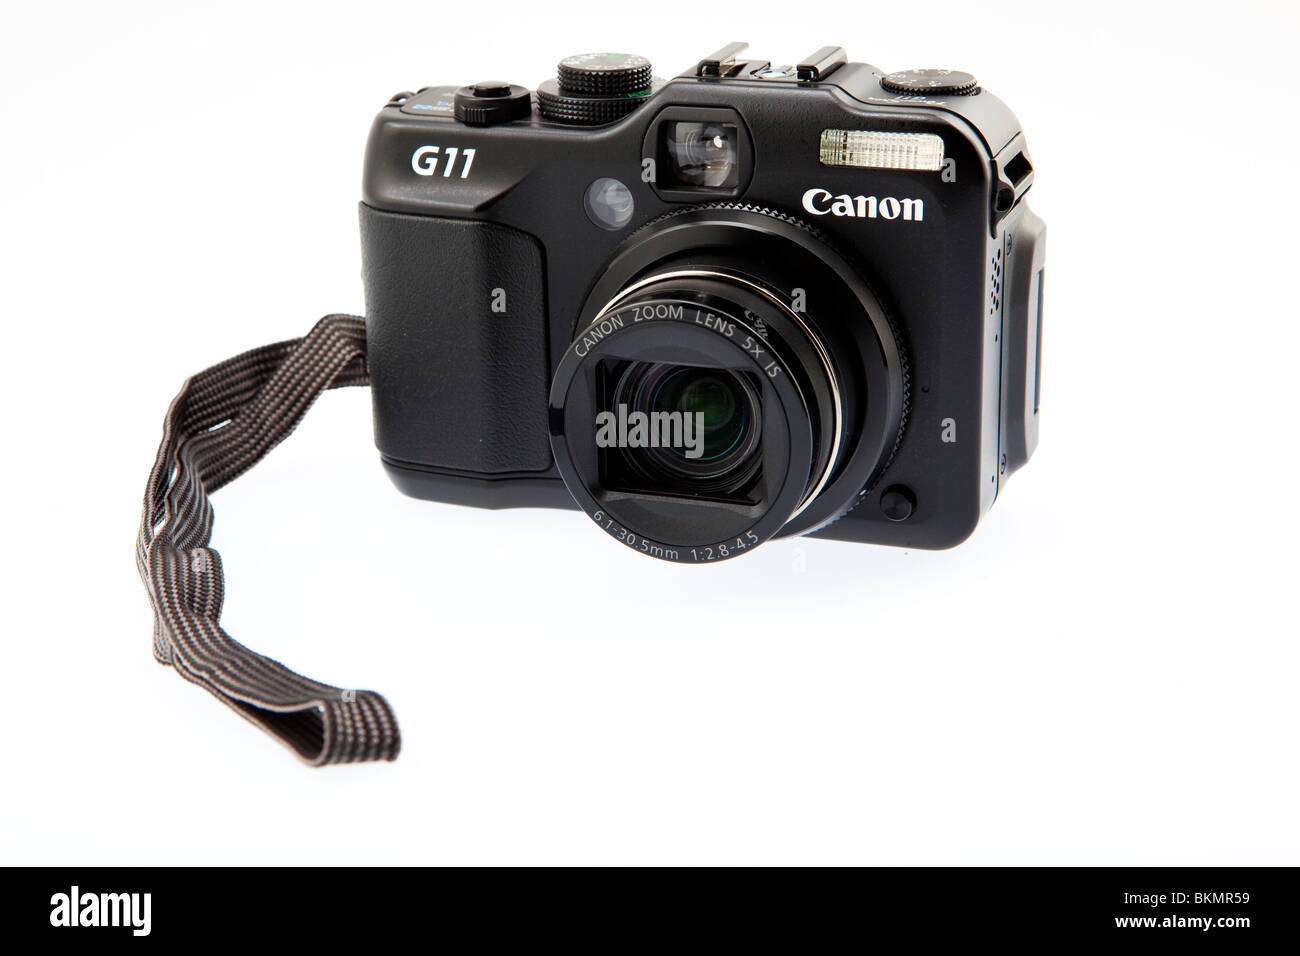 Canon G11 compact camera Stock Photo